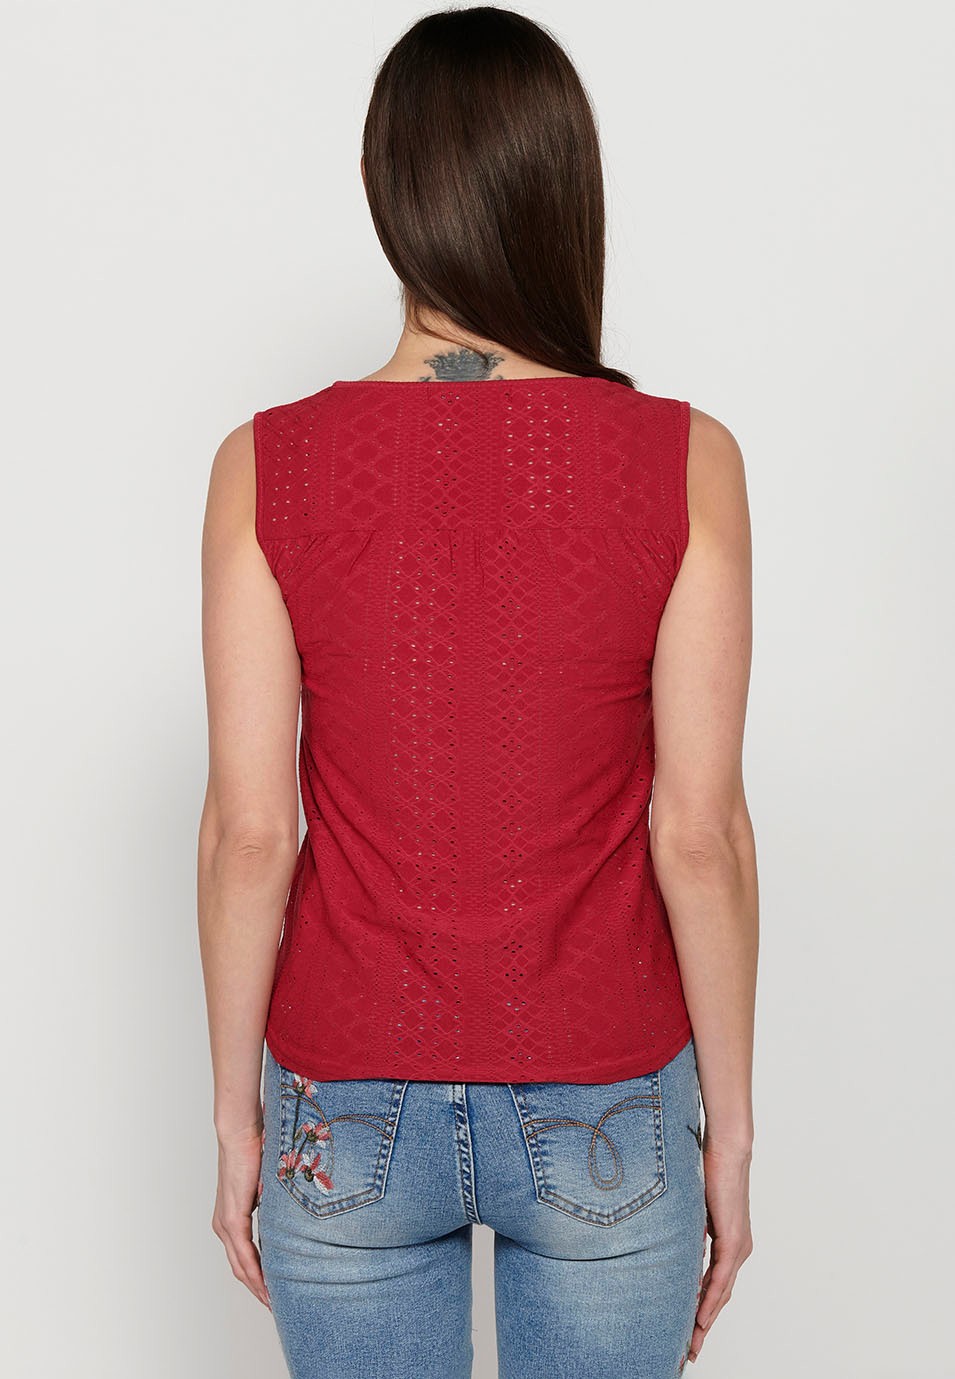 Camiseta sin mangas, cuello redondo con abertura color fucsia para mujer